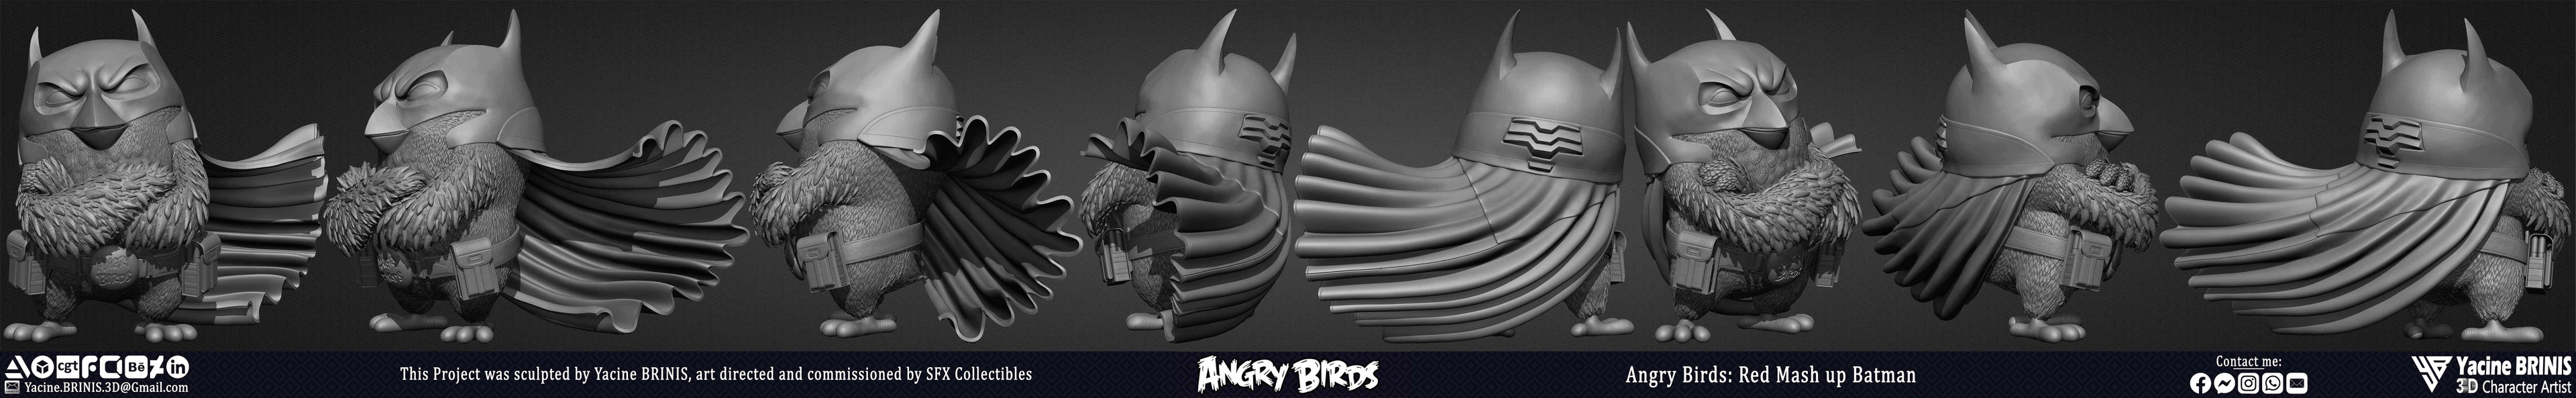 Red Mash Up Batman Angry Birds Movie 02 Rovio Entertainment sculpted by Yacine BRINIS 002